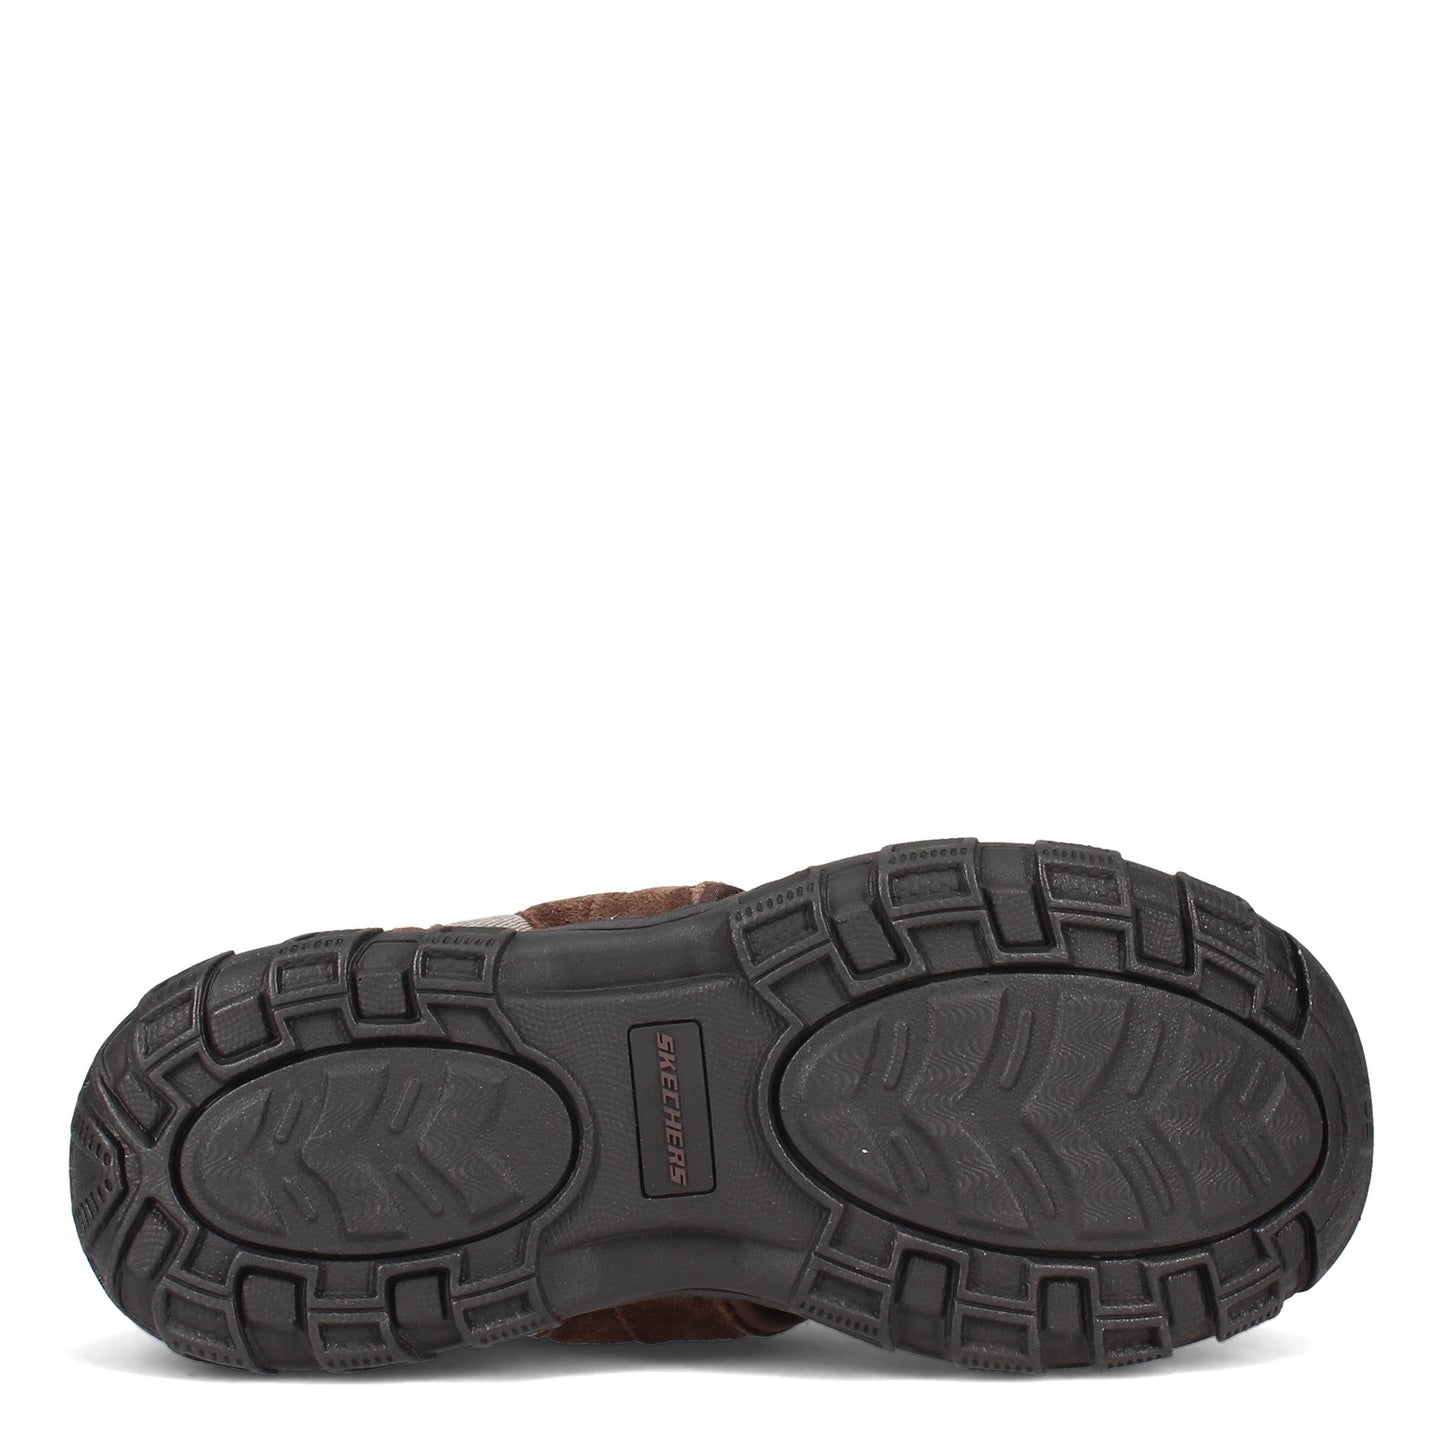 Peltz Shoes  Men's Skechers Relaxed Fit: Conifer - Selmo Sandal BROWN 64641-BRN